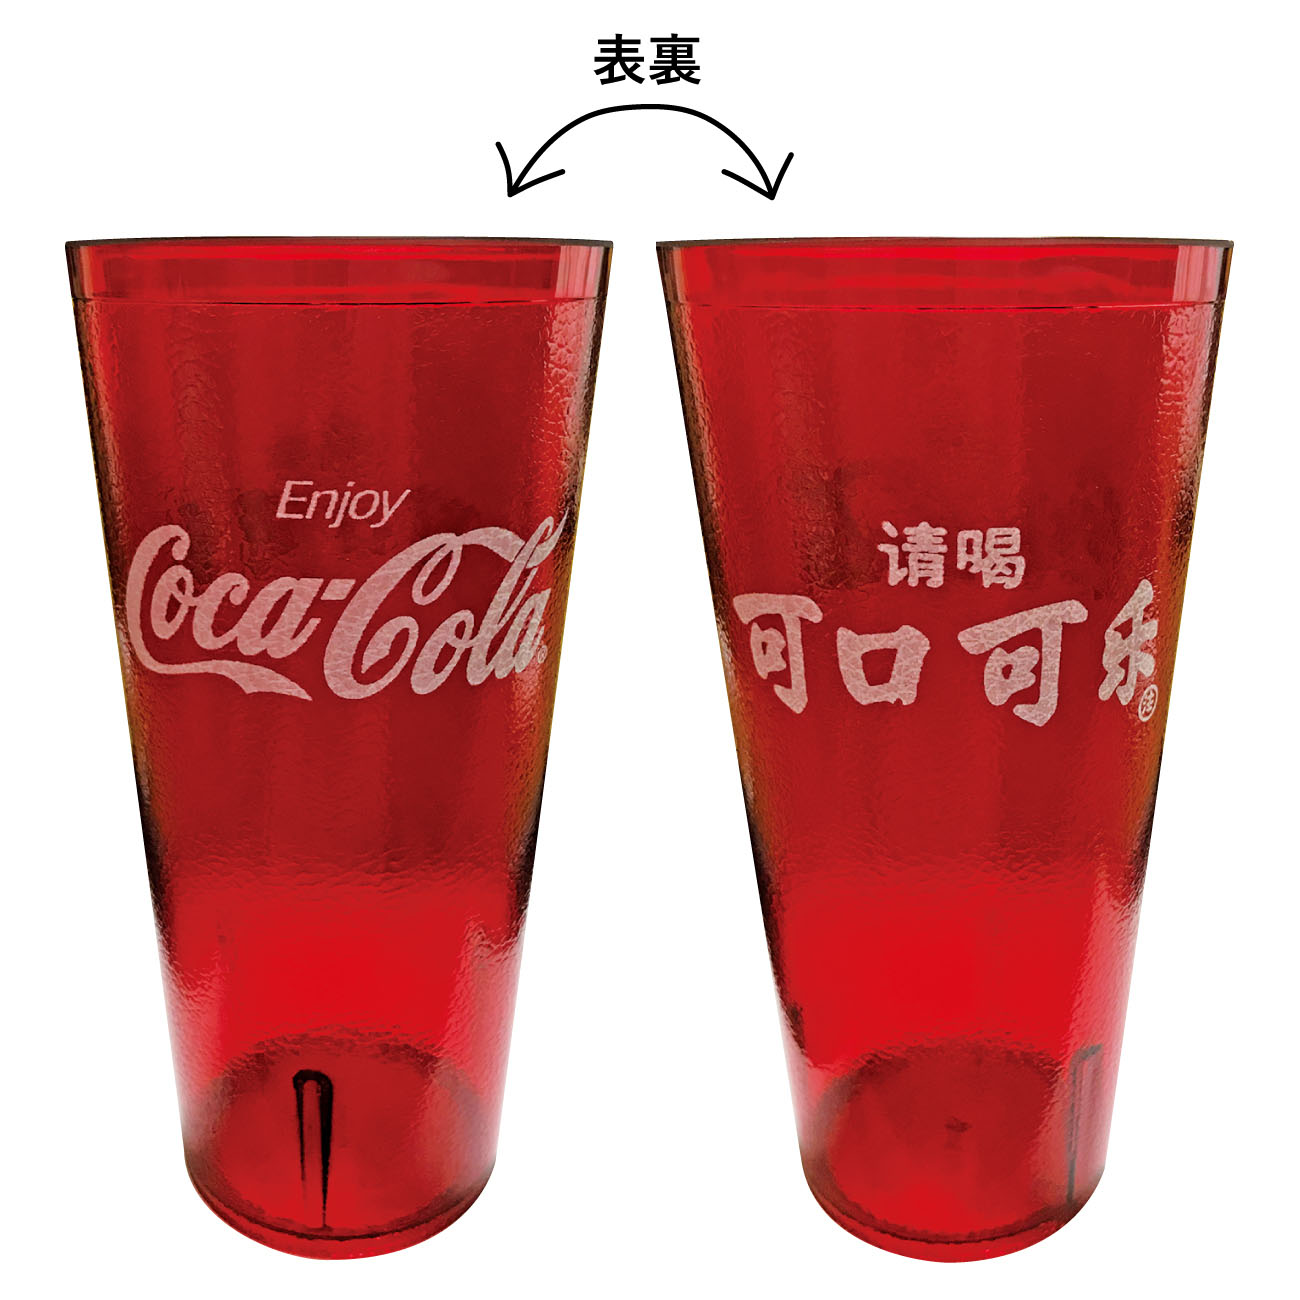 COCA-COLA TUMBLER CHINA TOWN 24oz【RED】コカコーラ タンブラー